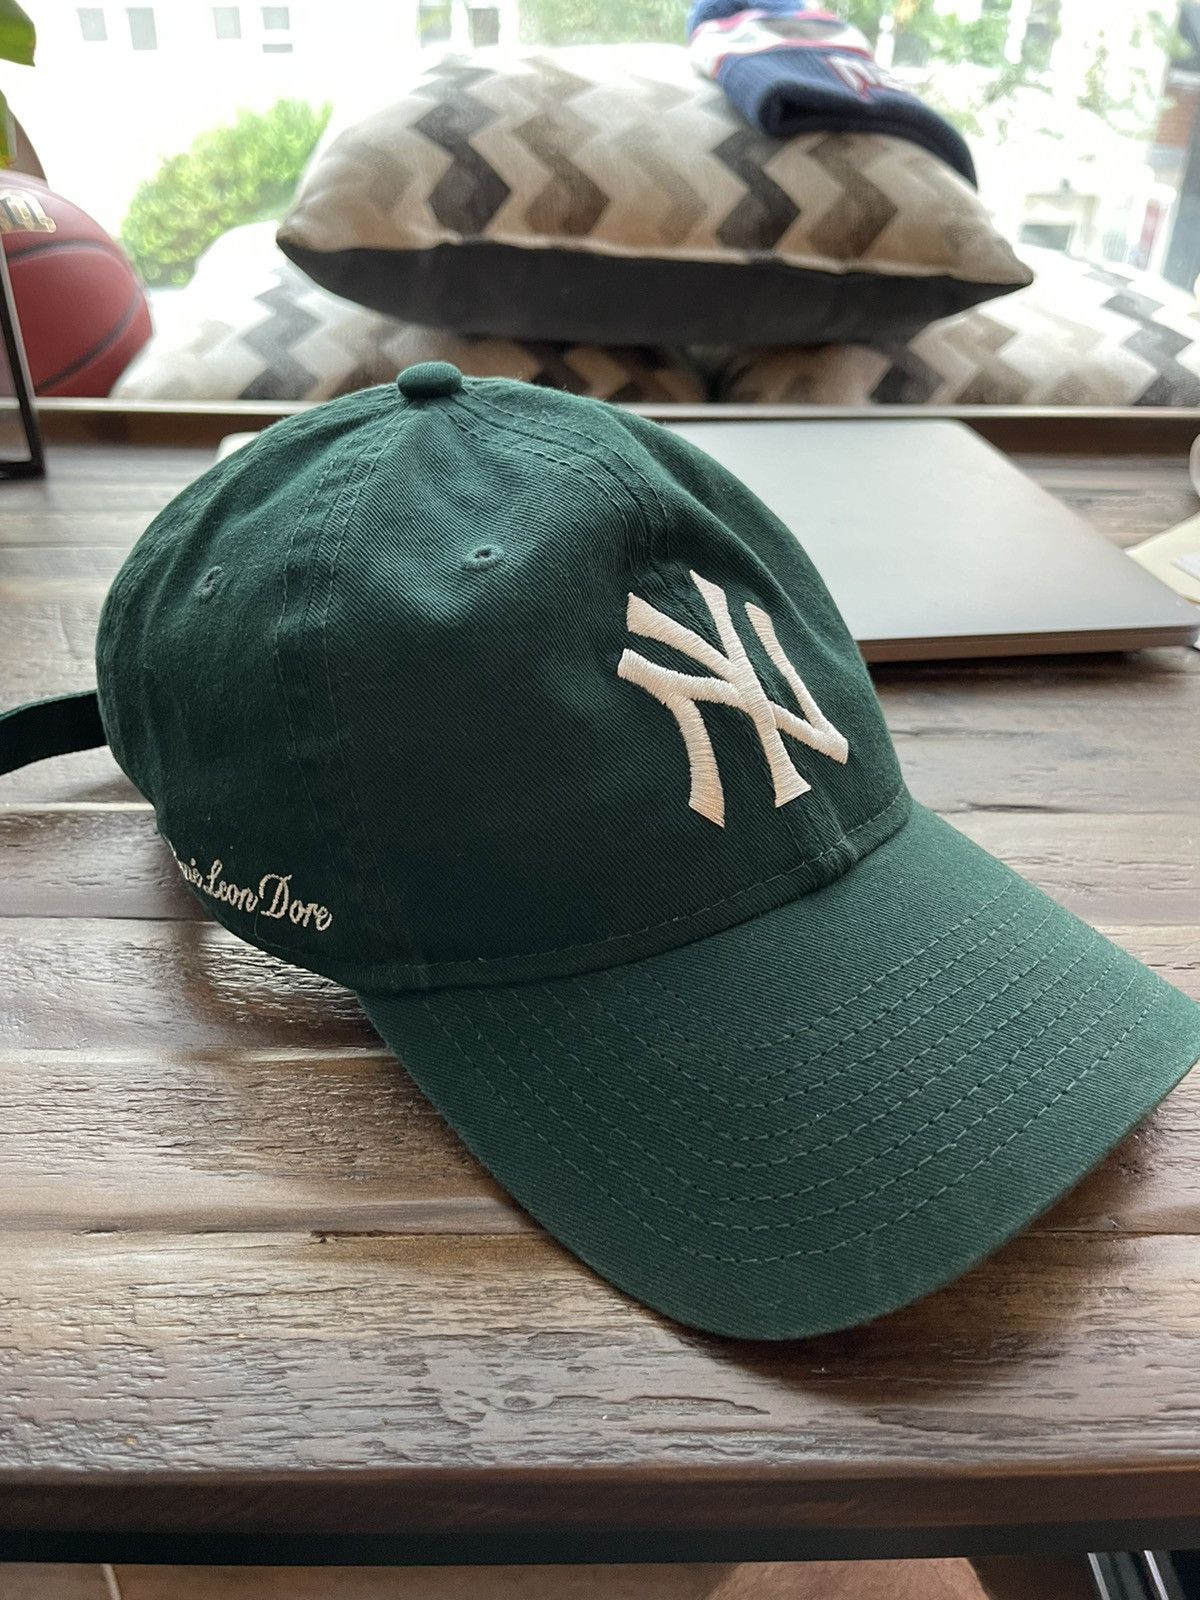 Aime Leon Dore New Era Yankees Ballpark Hat Green